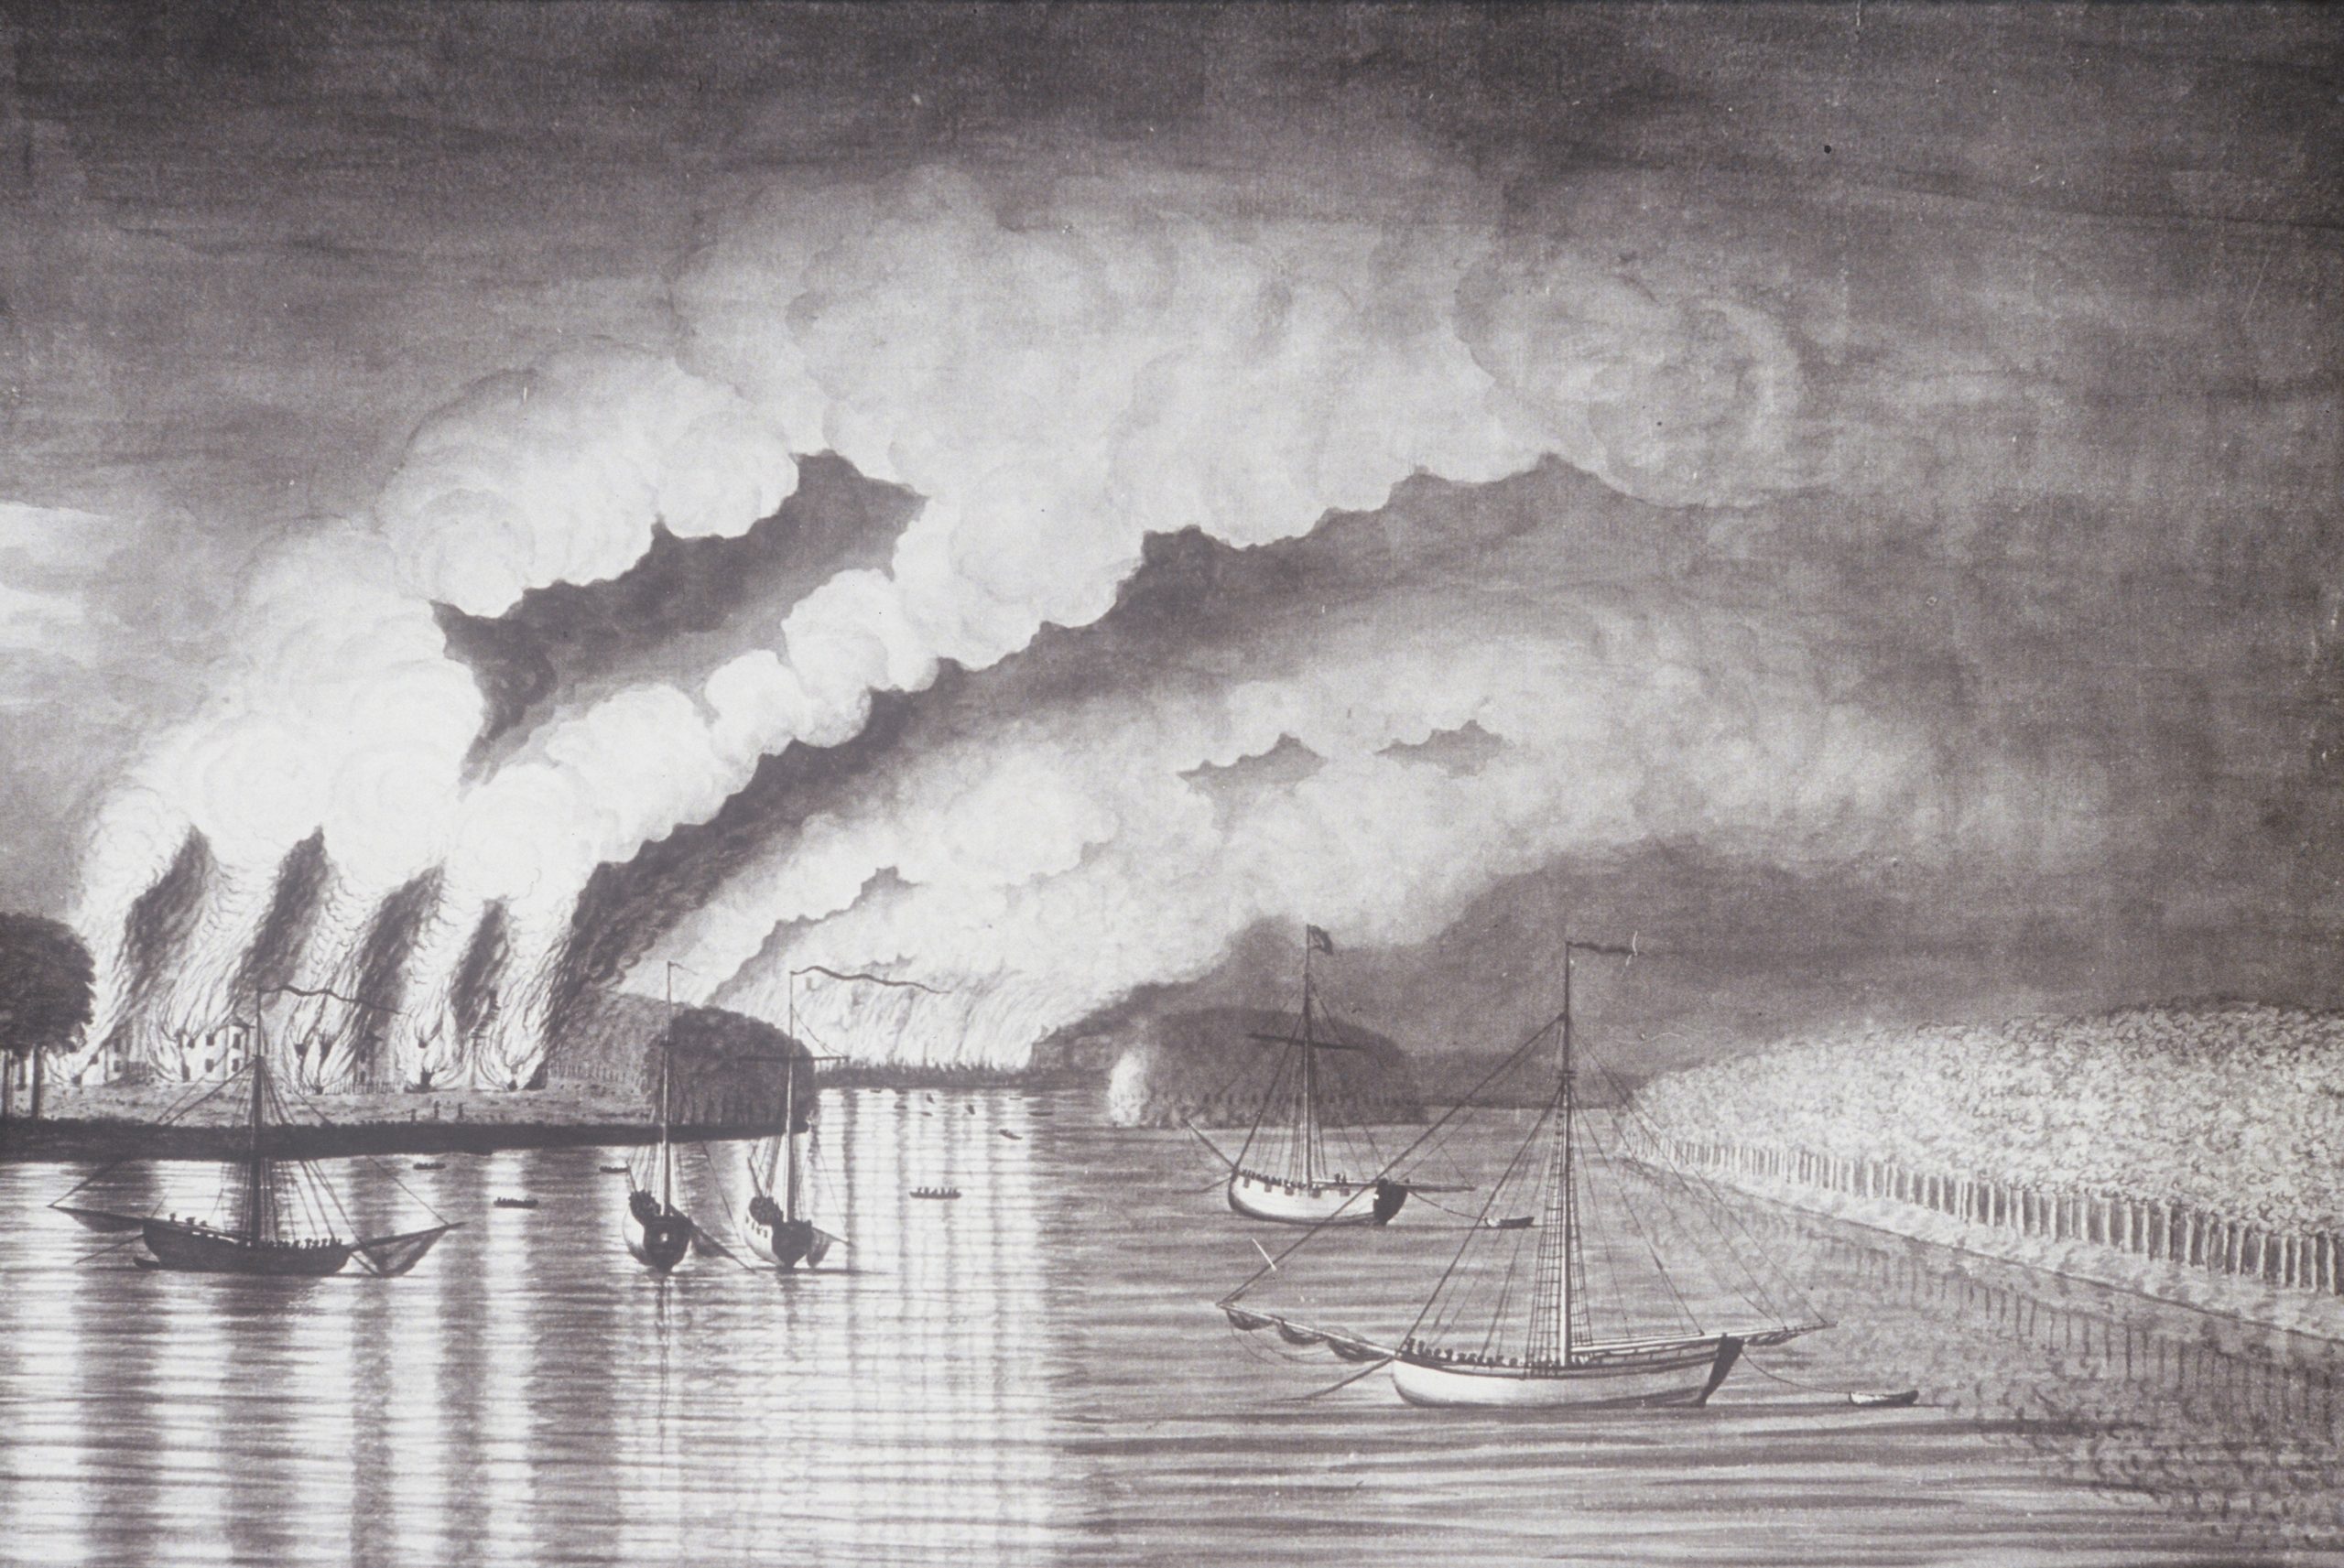 Sailboats float near a shore where many fires burn. Smoke billows to the sky.